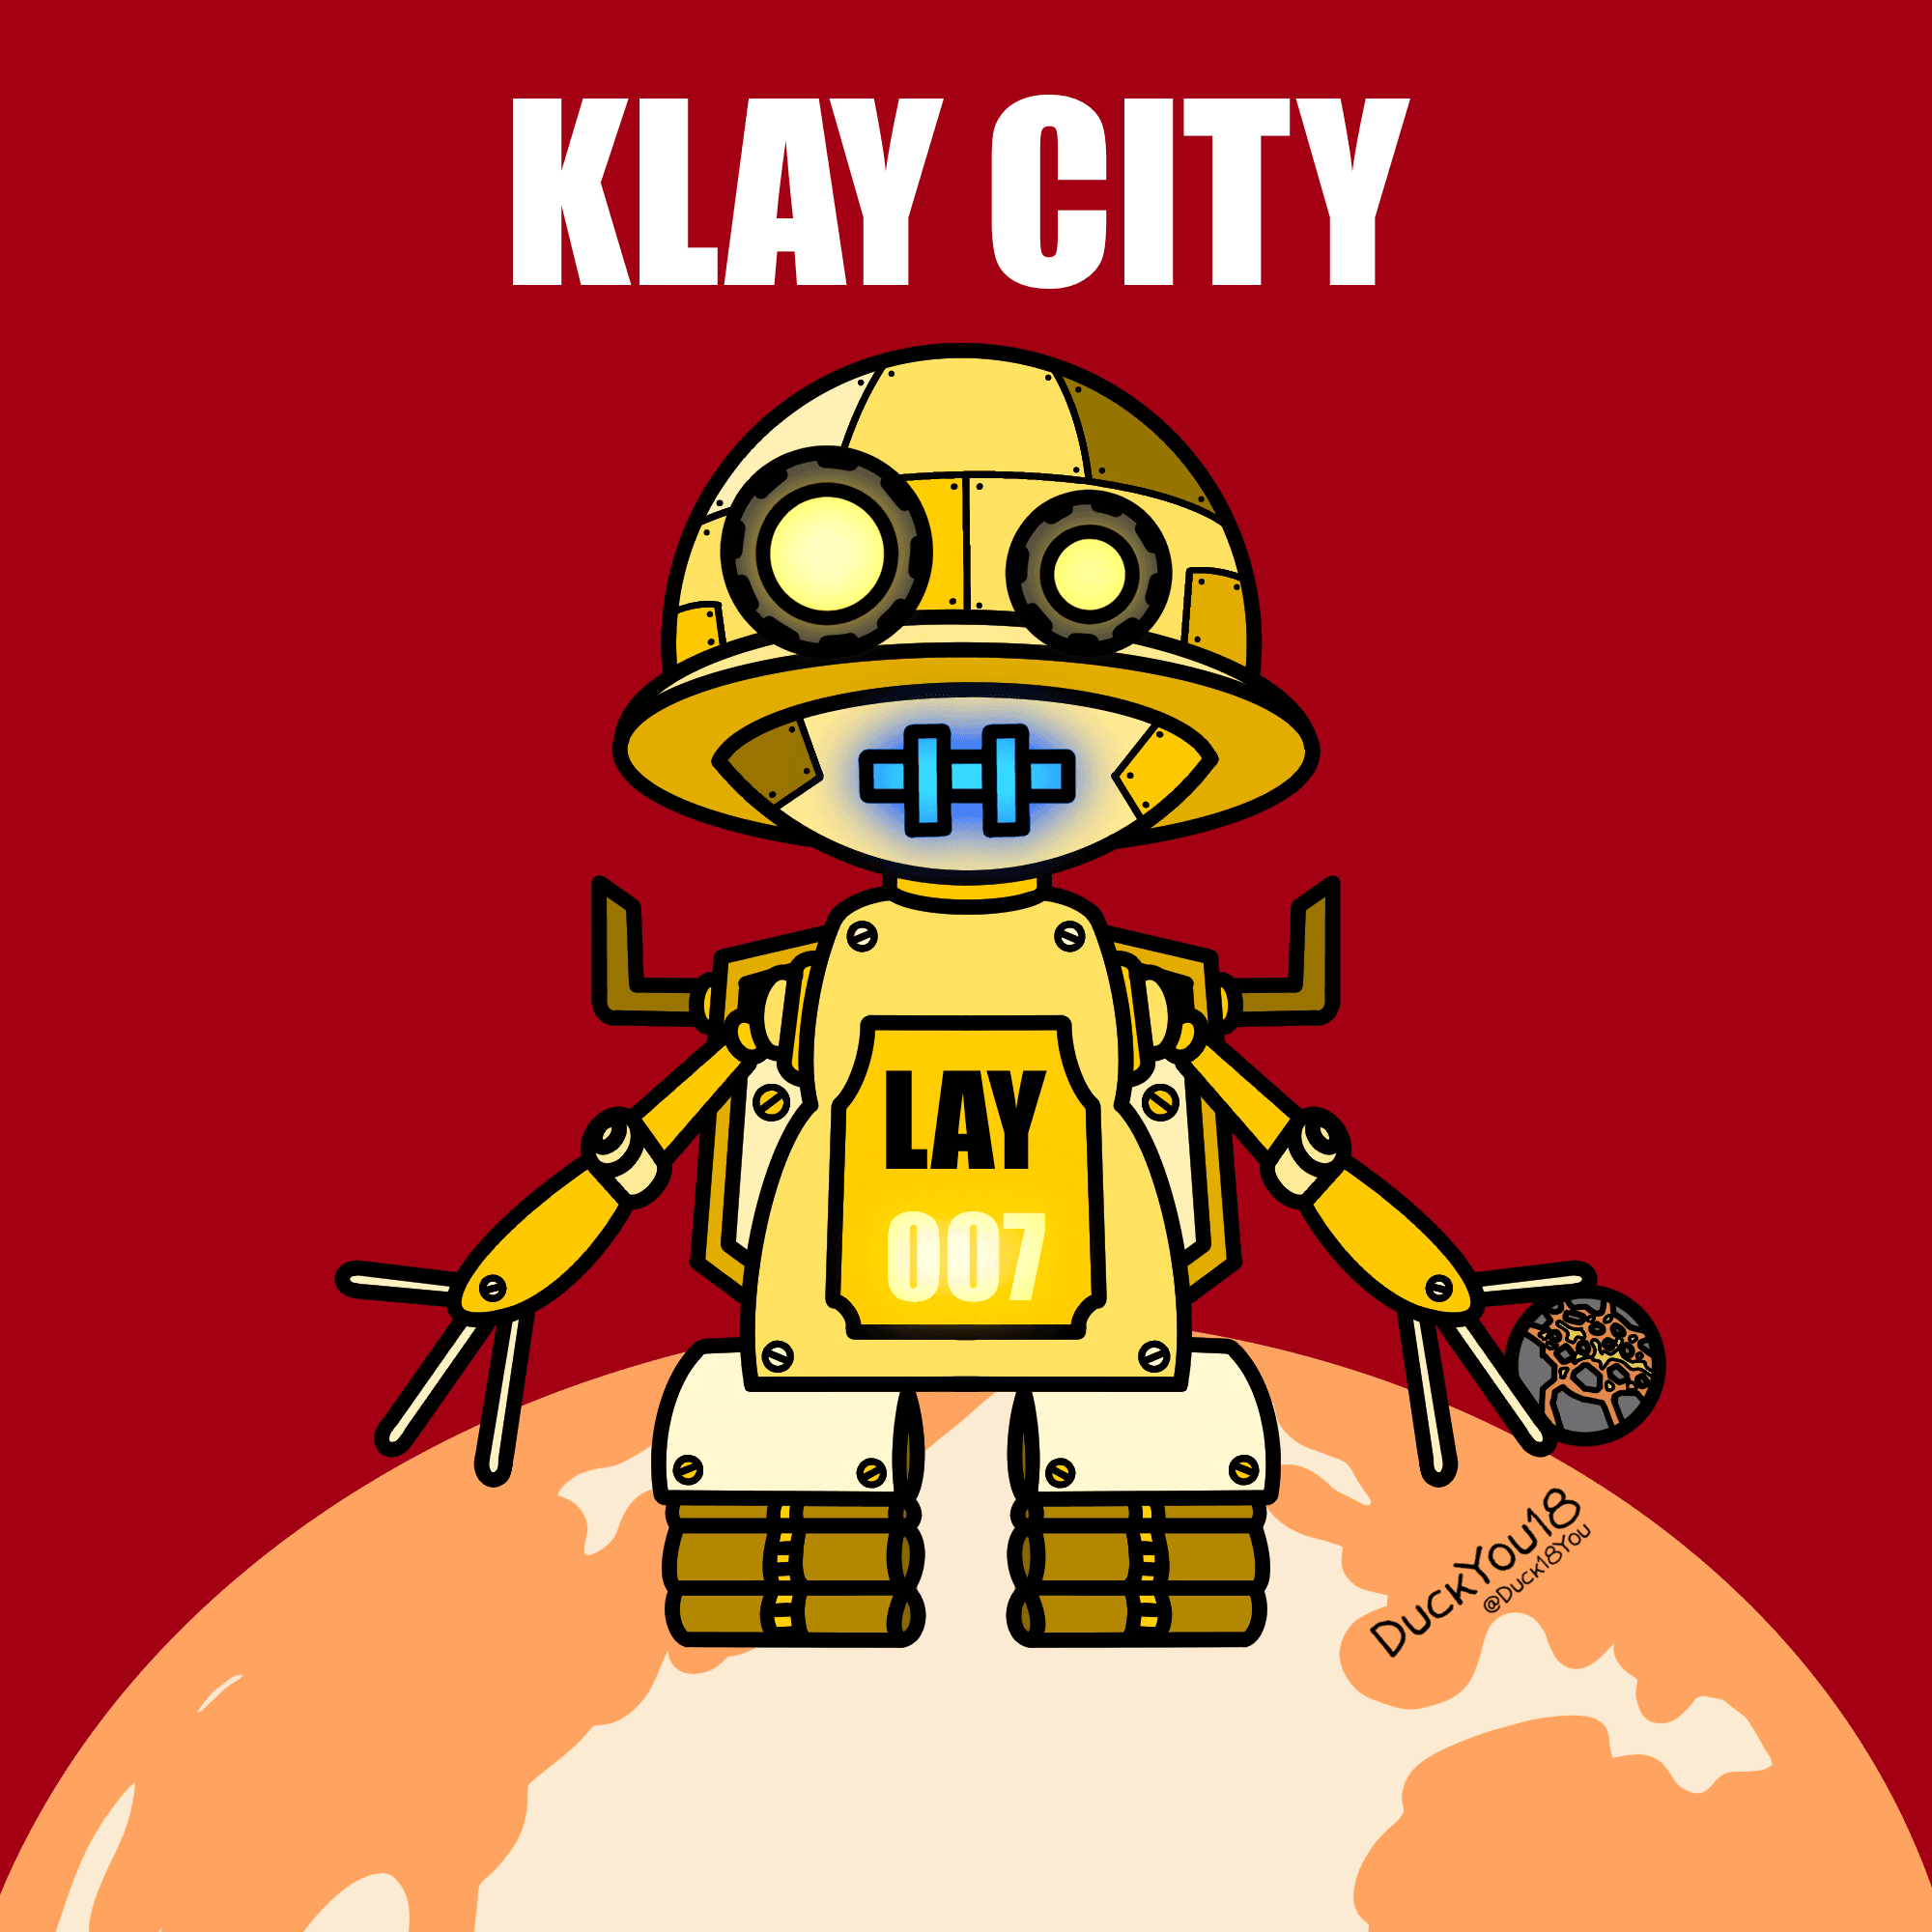 DuckYou18 FanArt : For. KLAY CITY #5